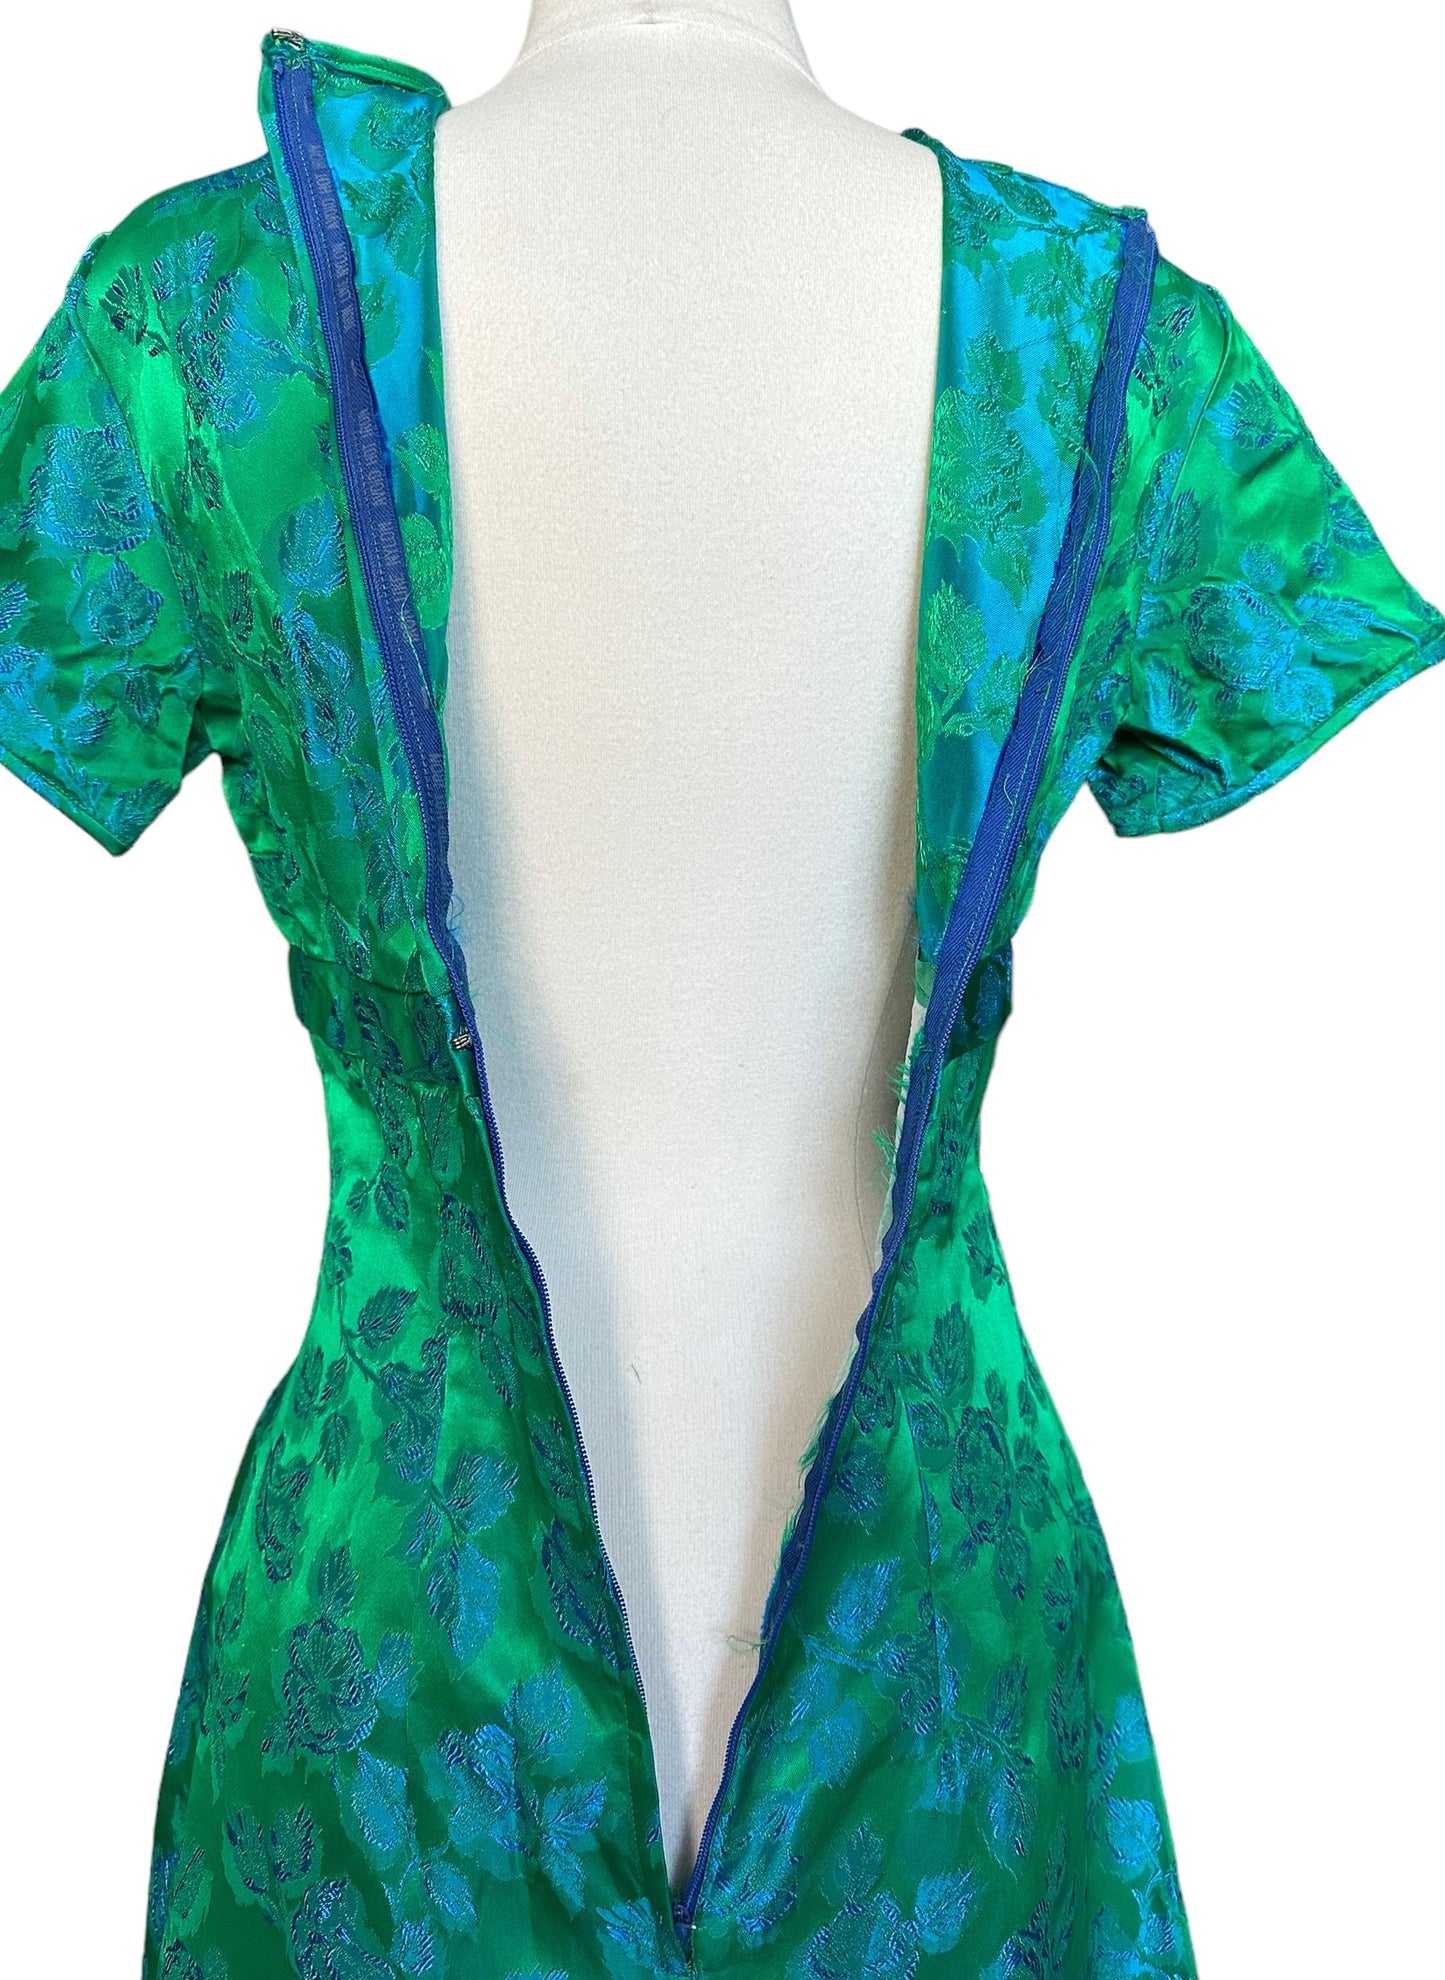 Back open zipper view of Vintage 1950s Blue/Green Brocade Dress |  Barn Owl Vintage Seattle | True Vintage Dresses